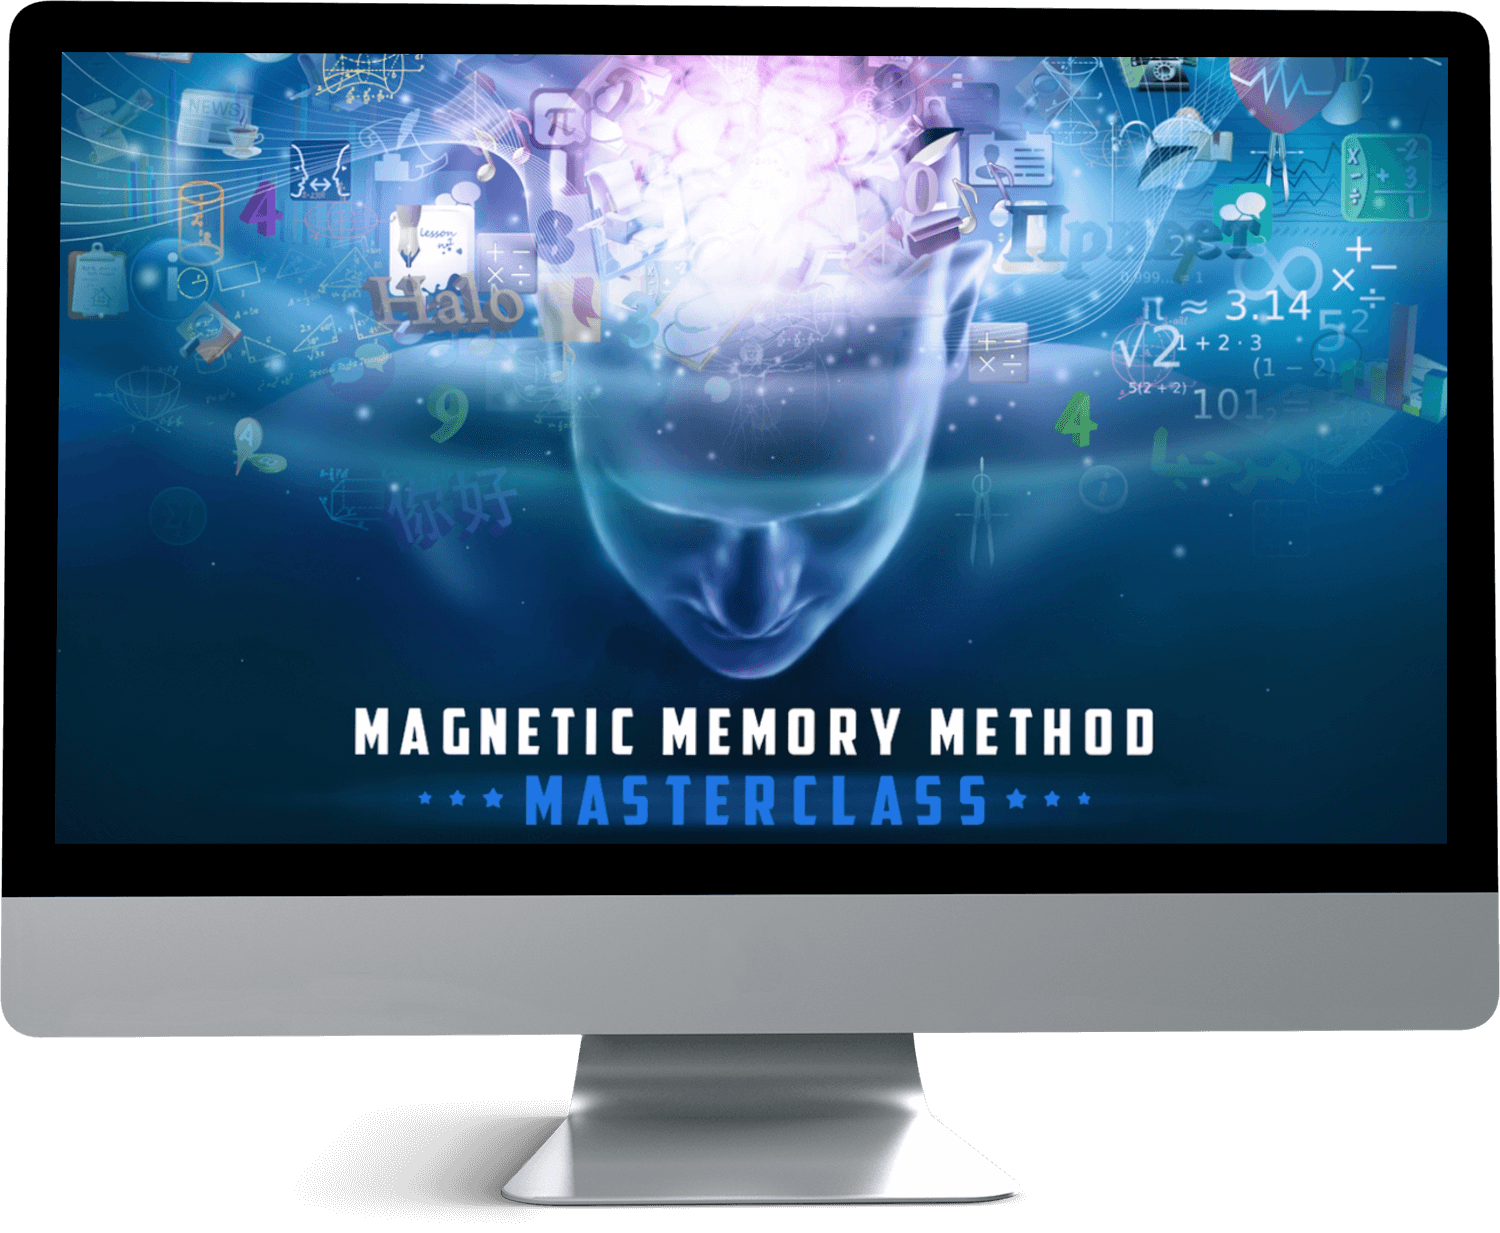 Magnetic Memory Method logo in computer screen optimized